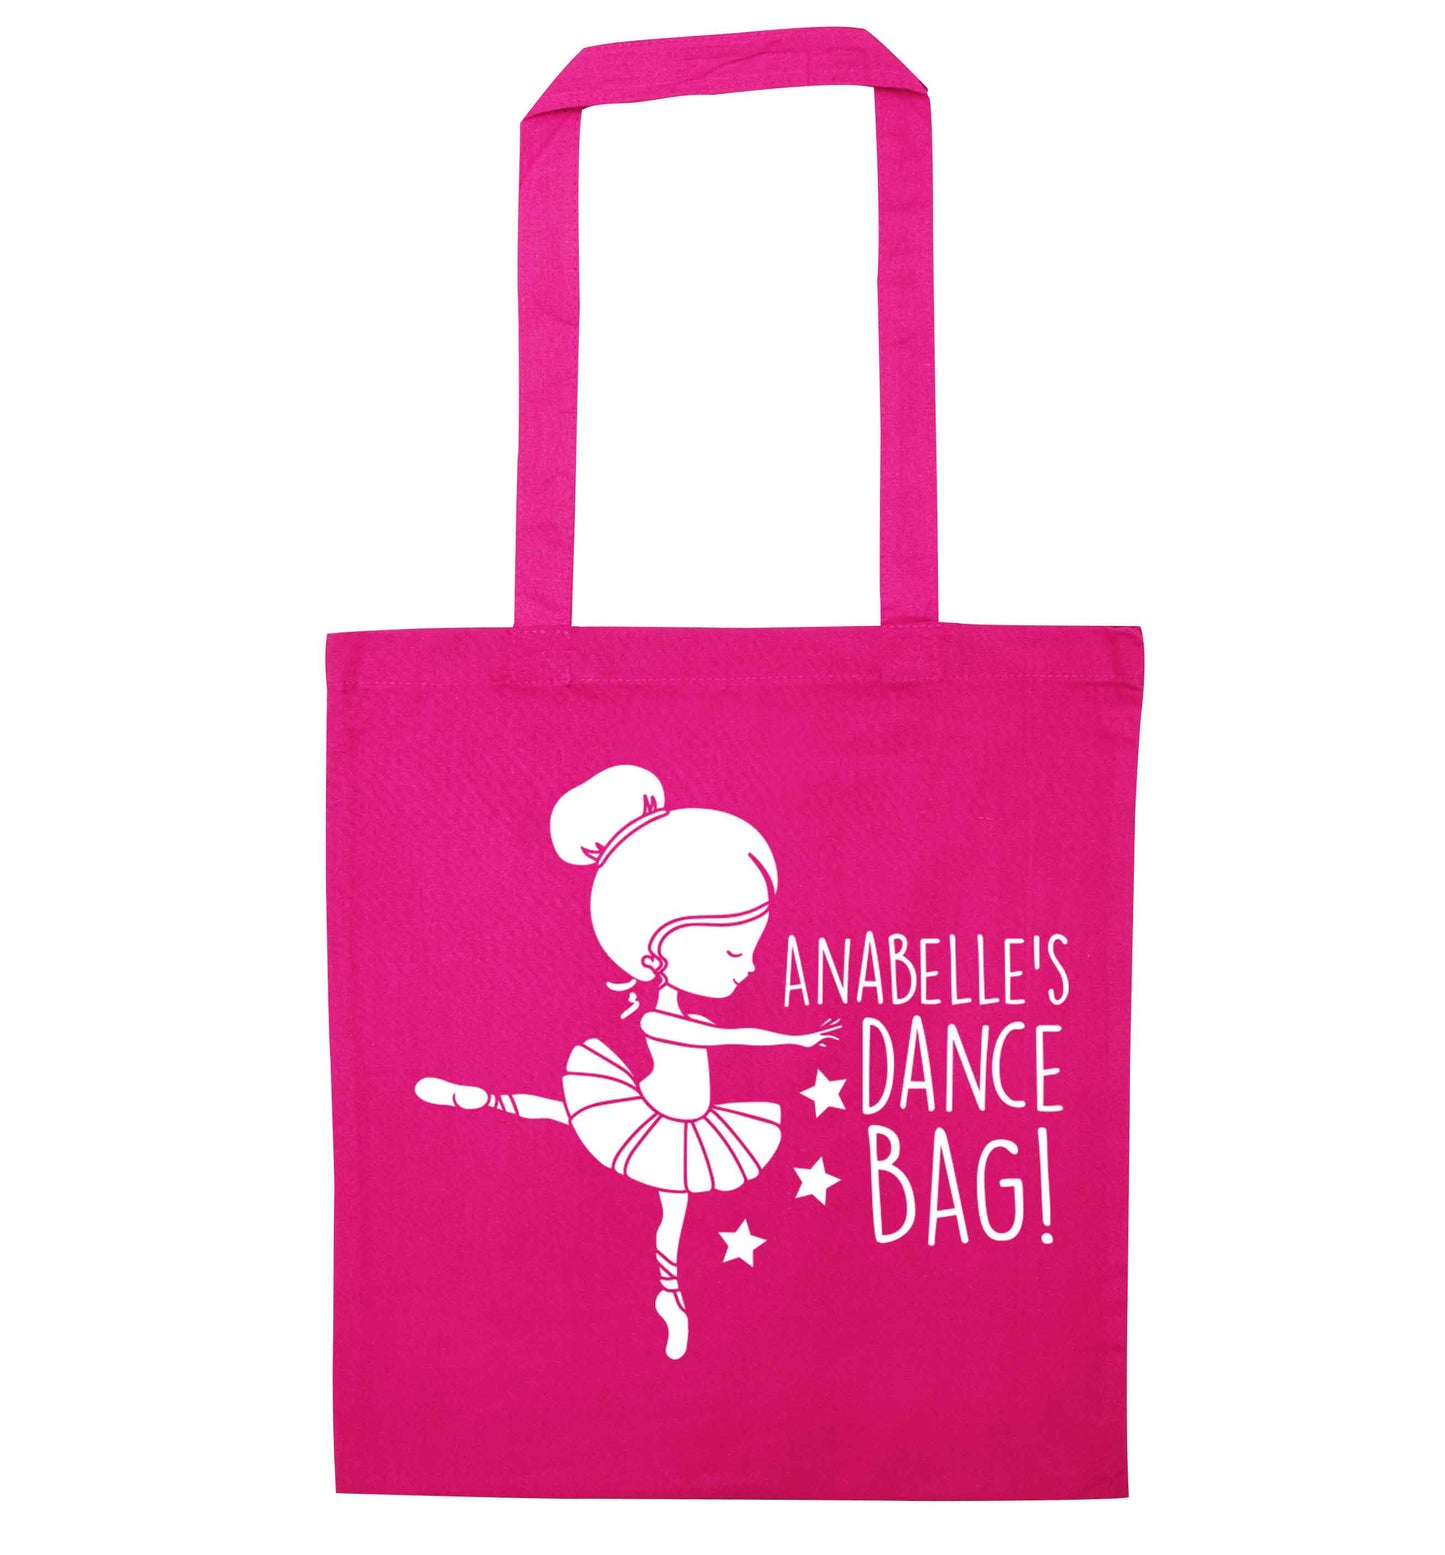 Personalised Ballet Dance Bag pink tote bag